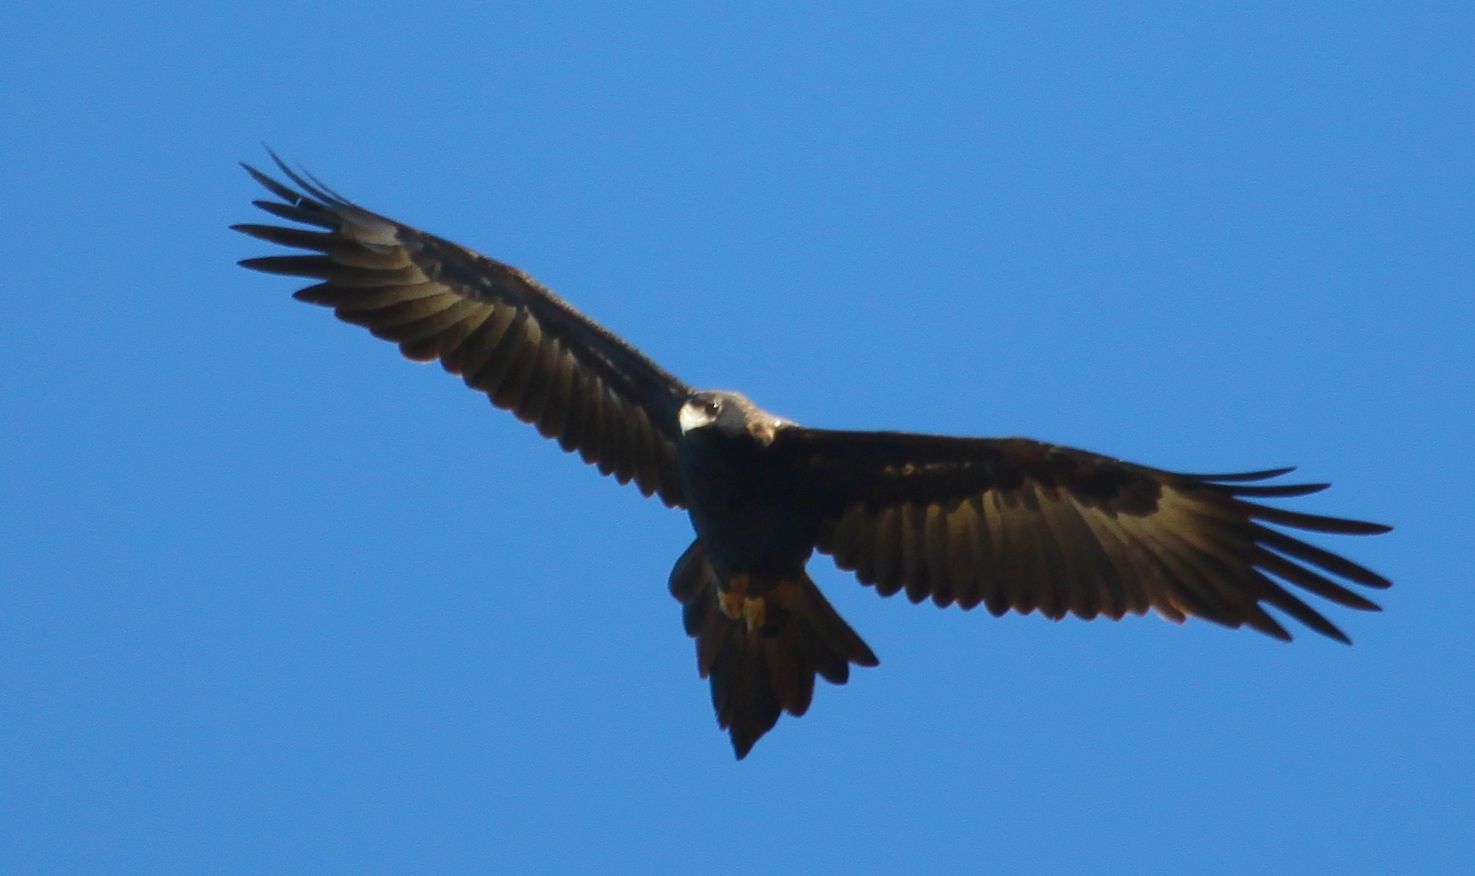 Richard Waring's Birds of Australia: Wedge-tailed Eagles in flight